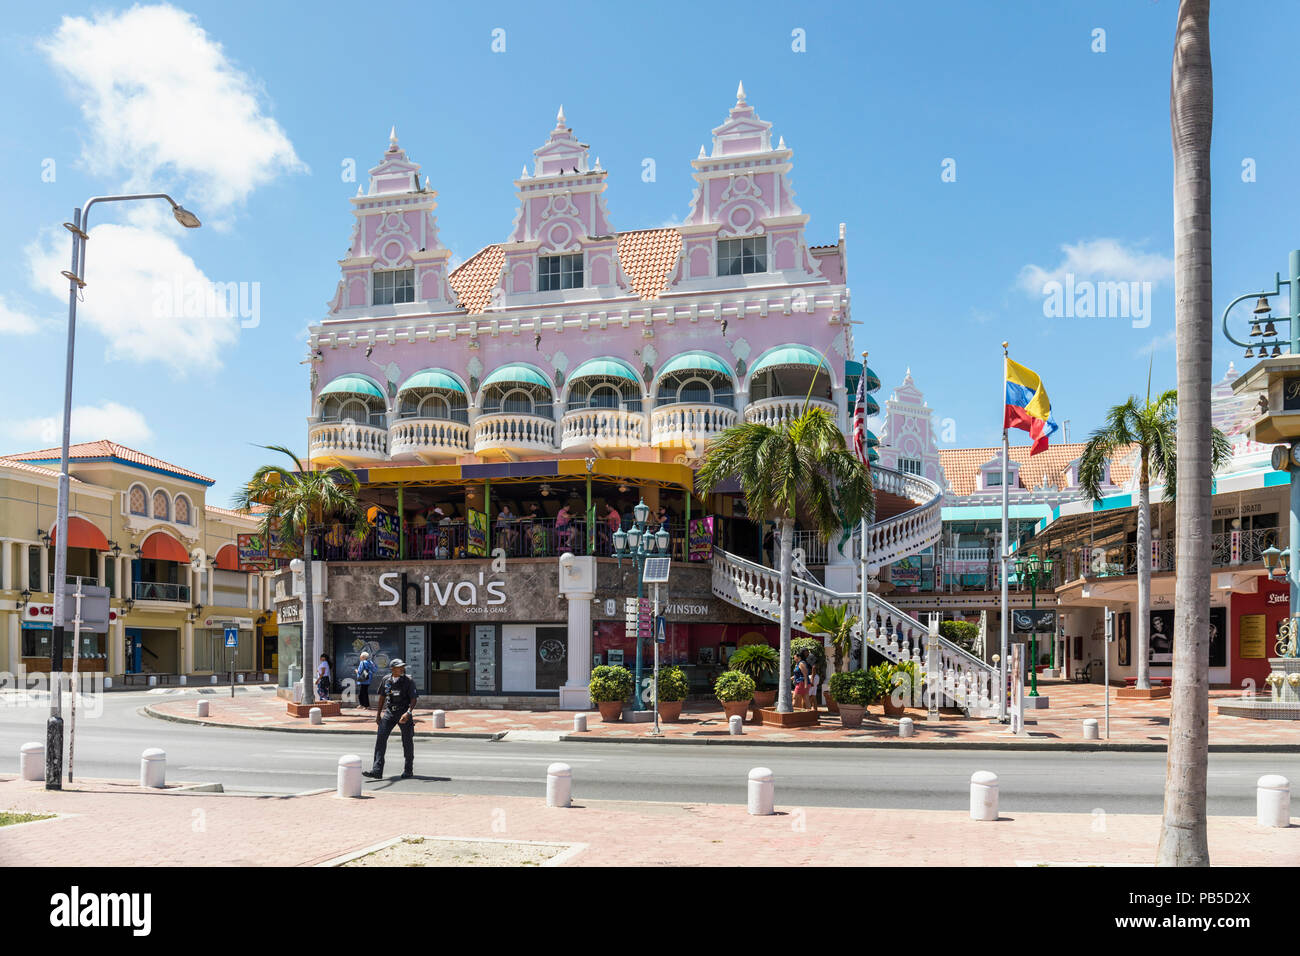 Shivas in Lloyd G. Smith Boulevard, Oranjestad, Aruba, Caraibi Foto Stock